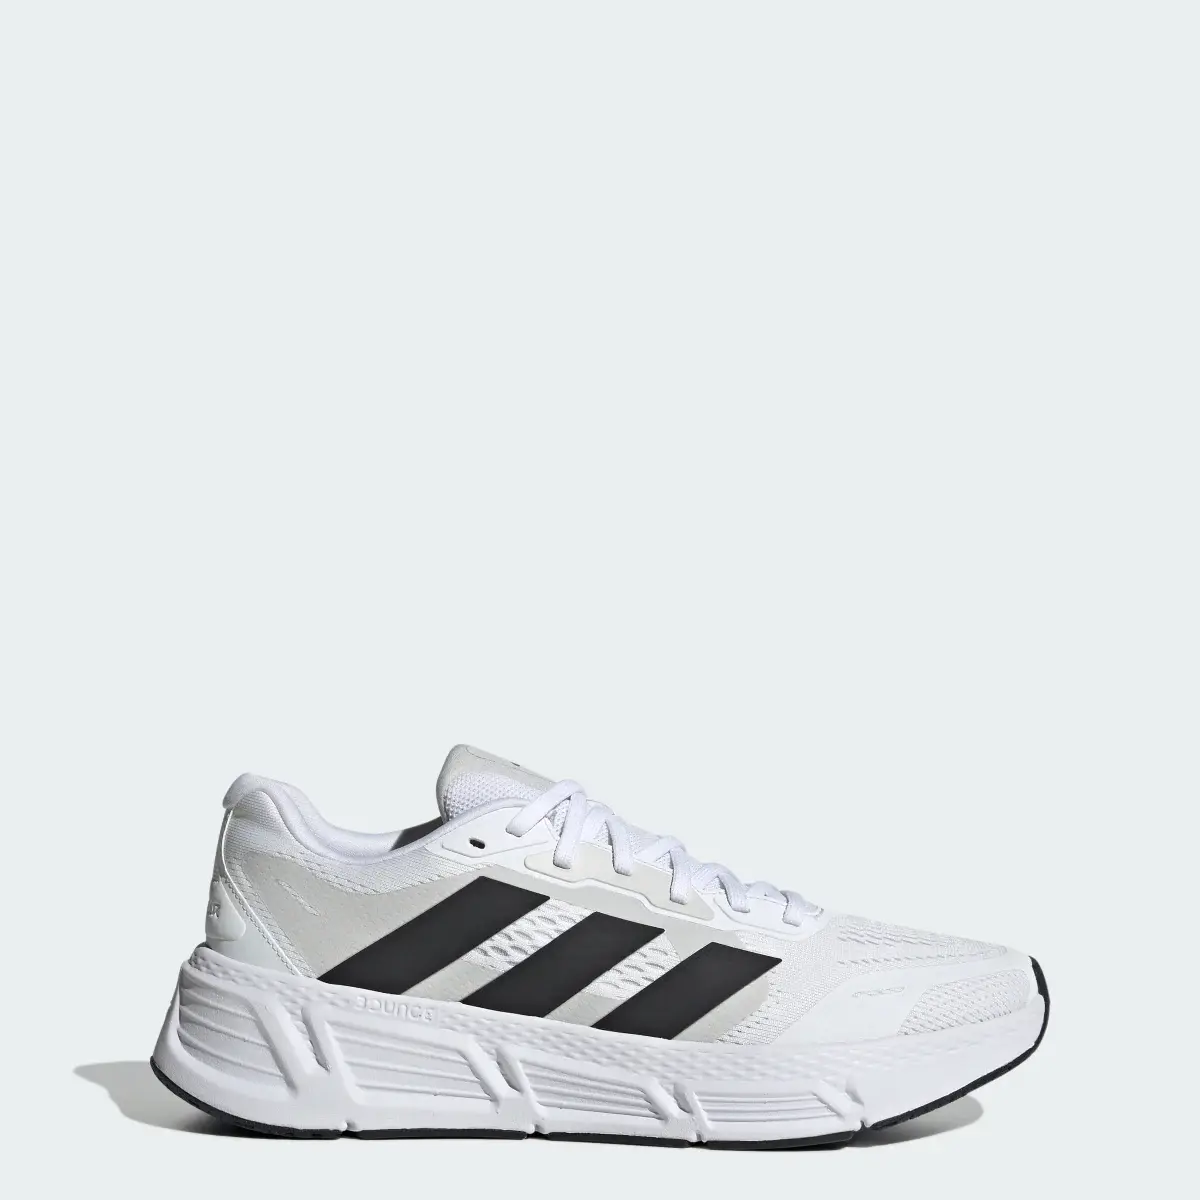 Adidas Questar Shoes. 1